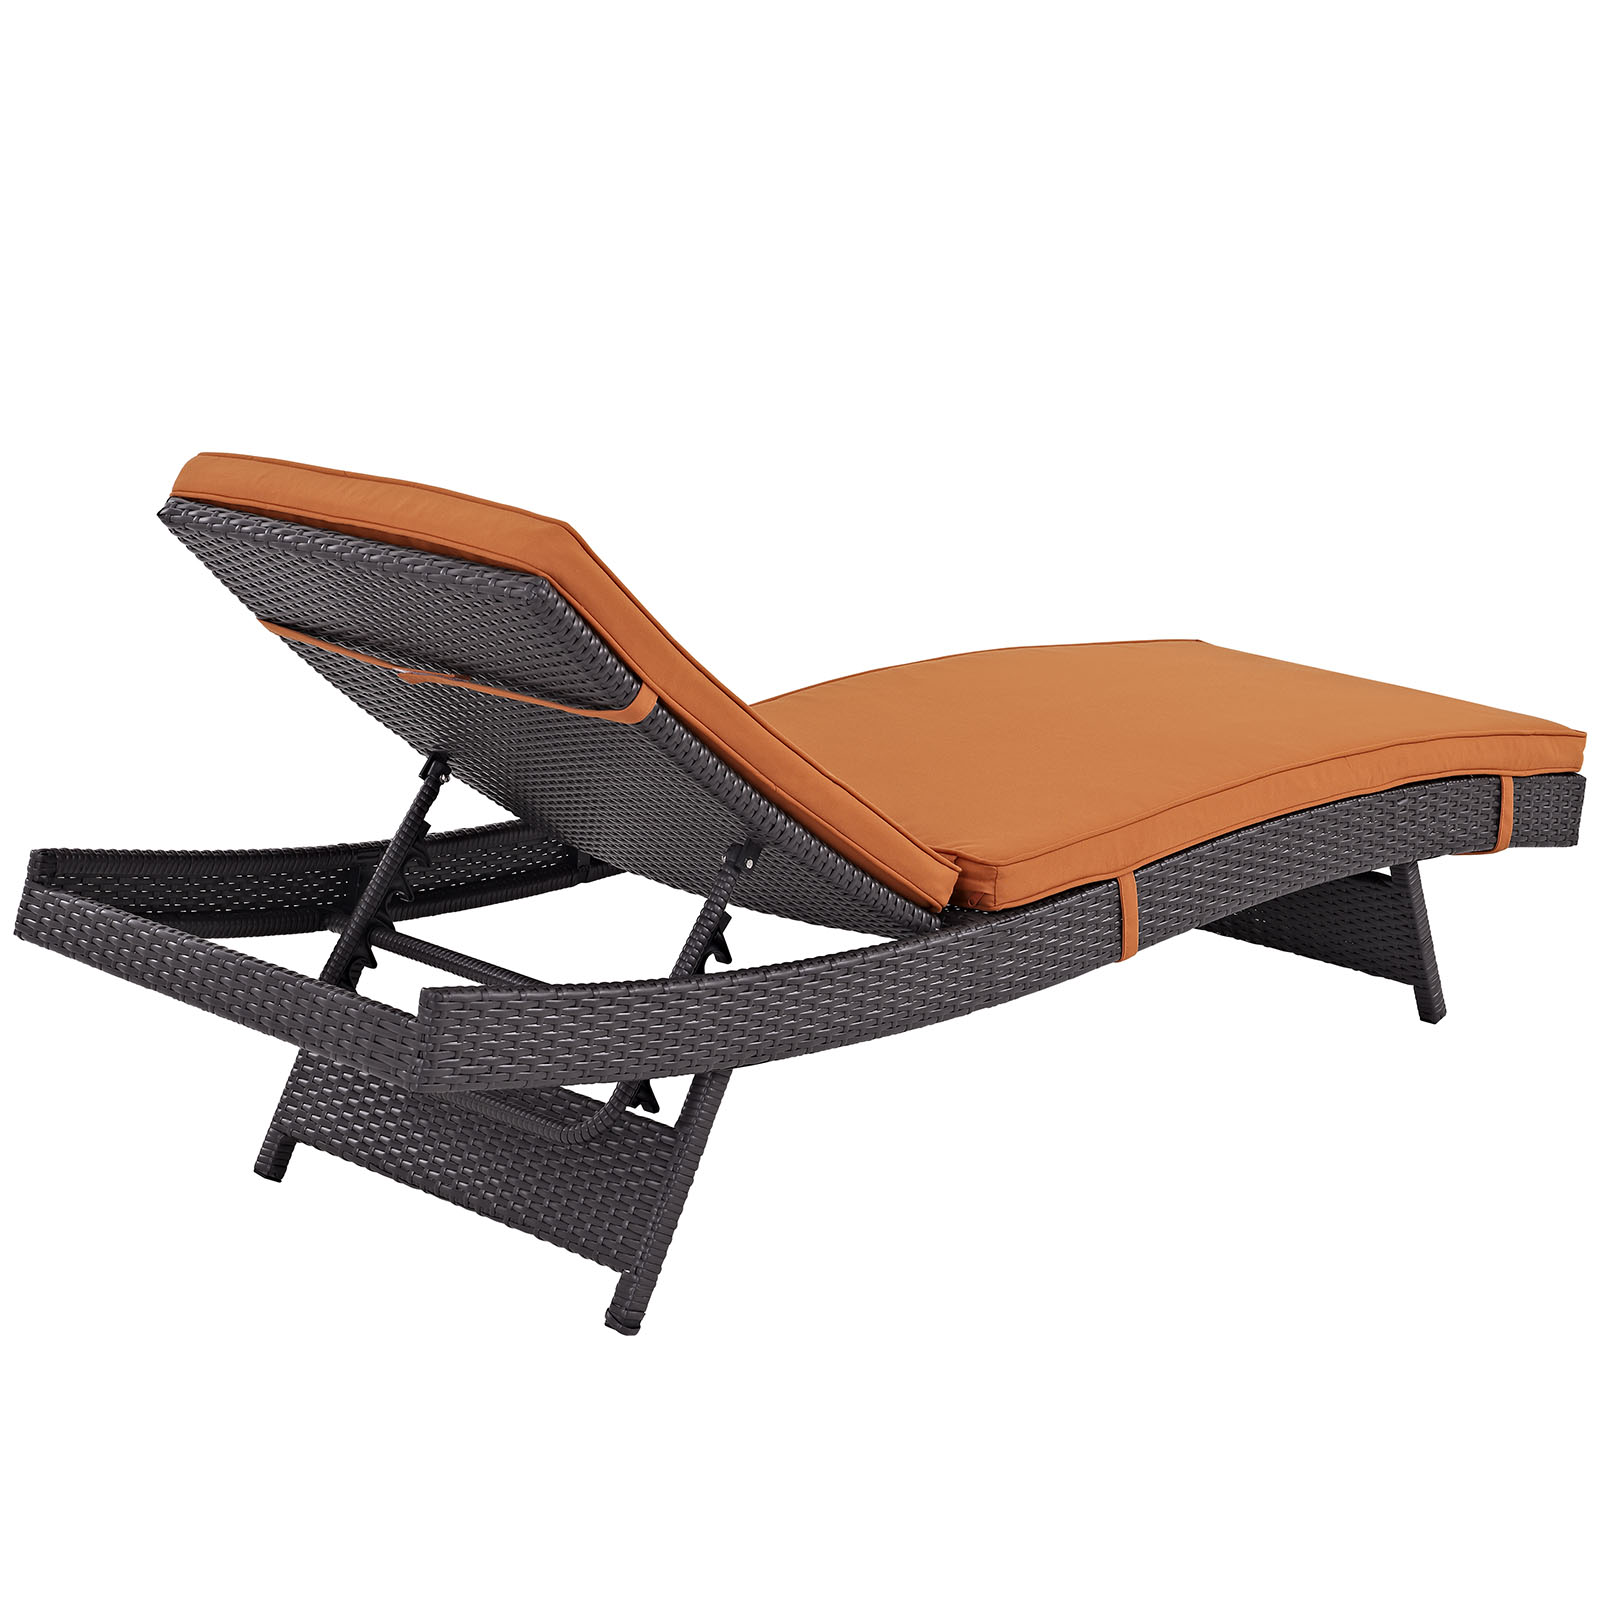 Modway Convene Chaise Outdoor Patio Set of 6 in Espresso Orange - image 5 of 5